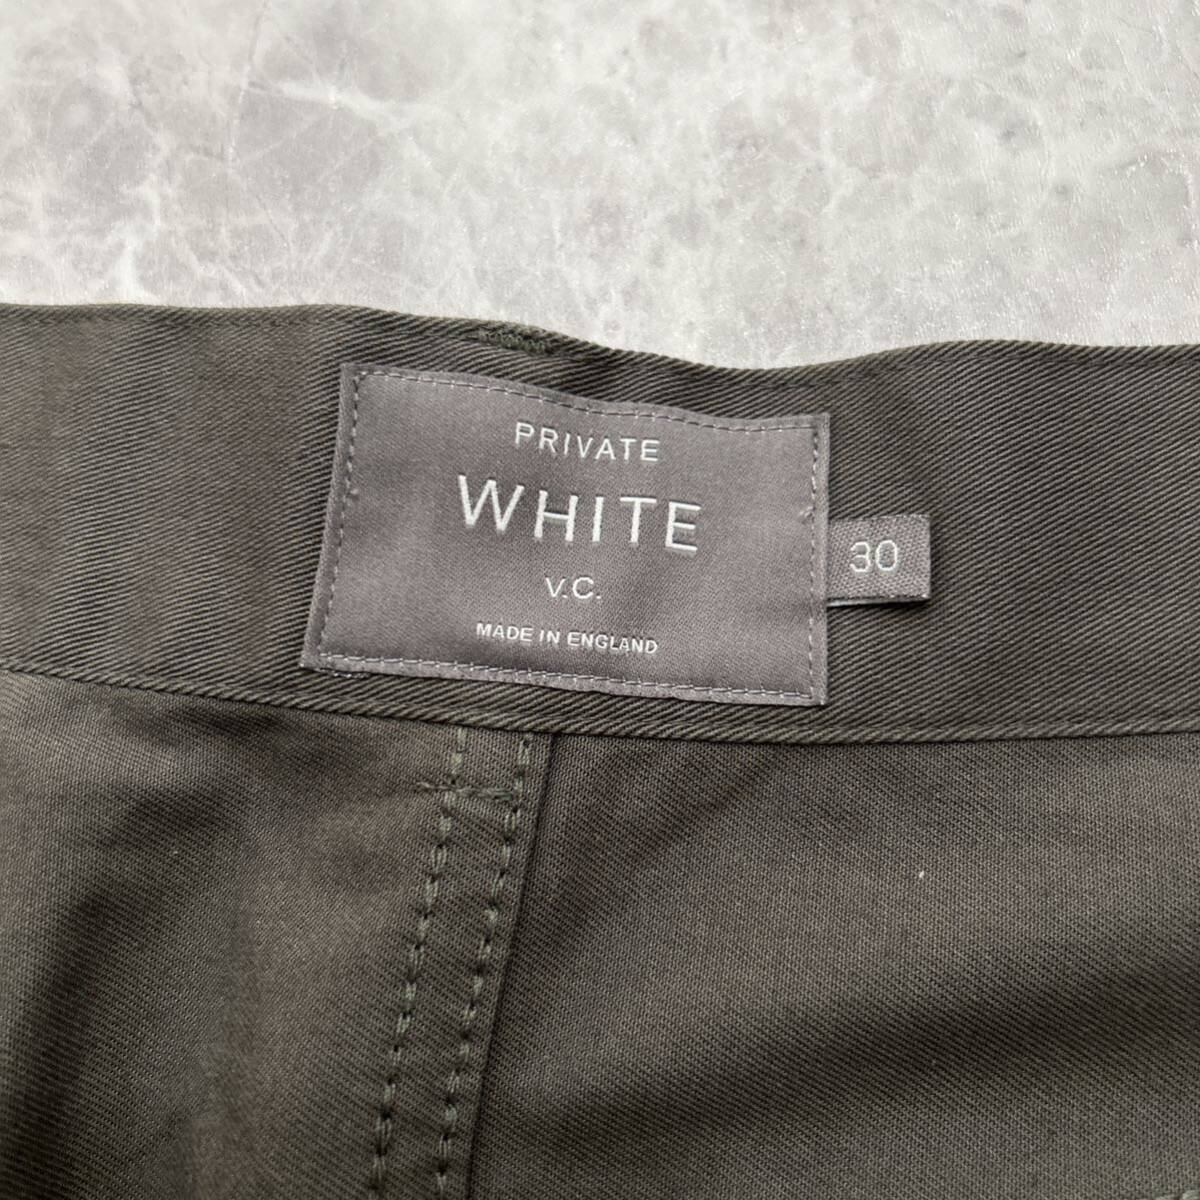 W @ 英国製 '高級感溢れる' PRIVATE WHITE V.C. プライベートホワイトブイシー 高品質 テーパードパンツ W30 メンズ 紳士服 ボトムス 古着_画像7